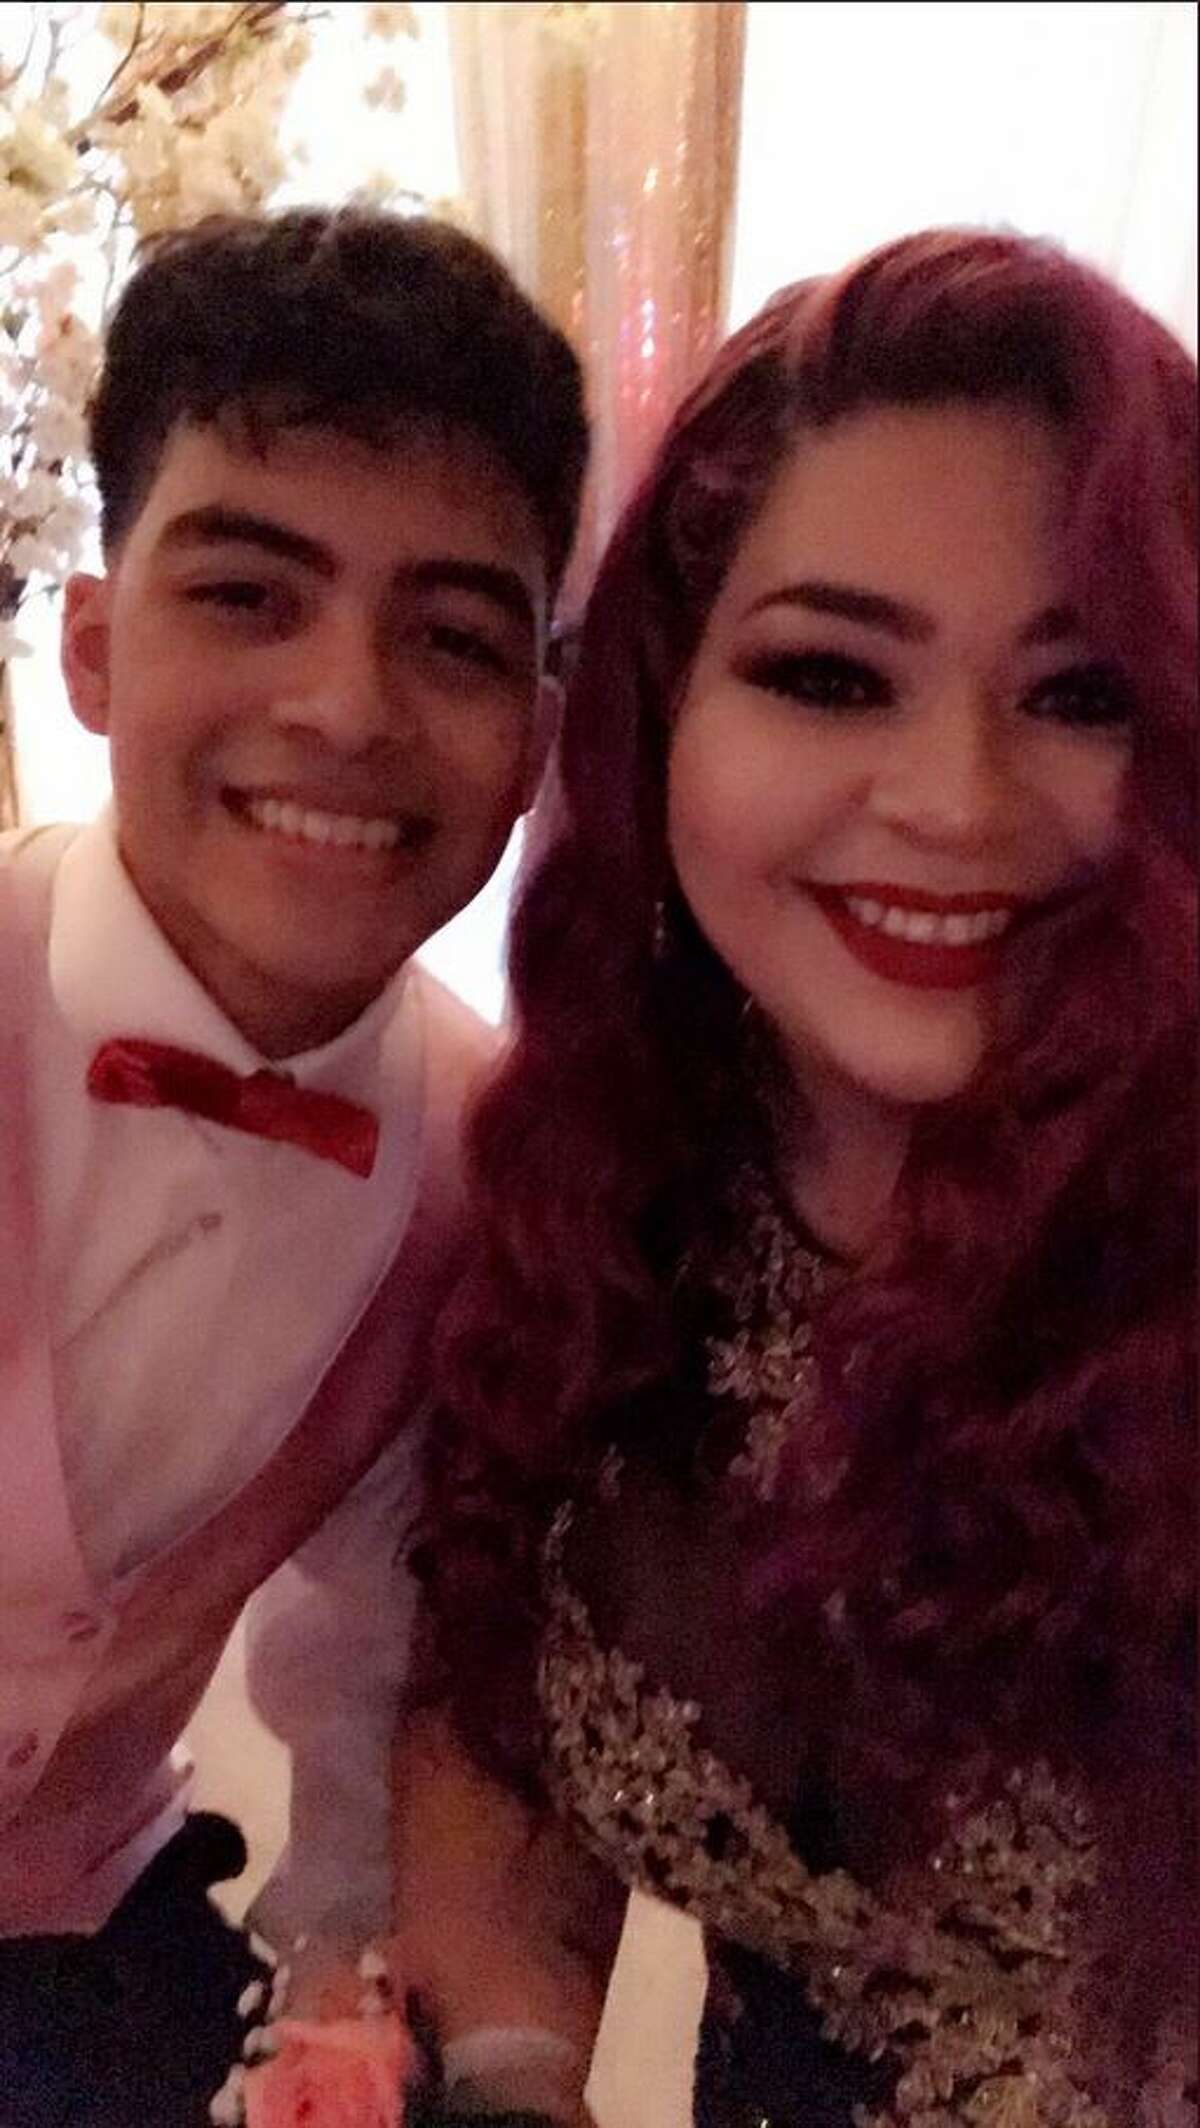 Joe Moreno, 18, and his mother Vanessa Moreno at the Collegiate High School prom in Corpus Christi on April 13, 2018.